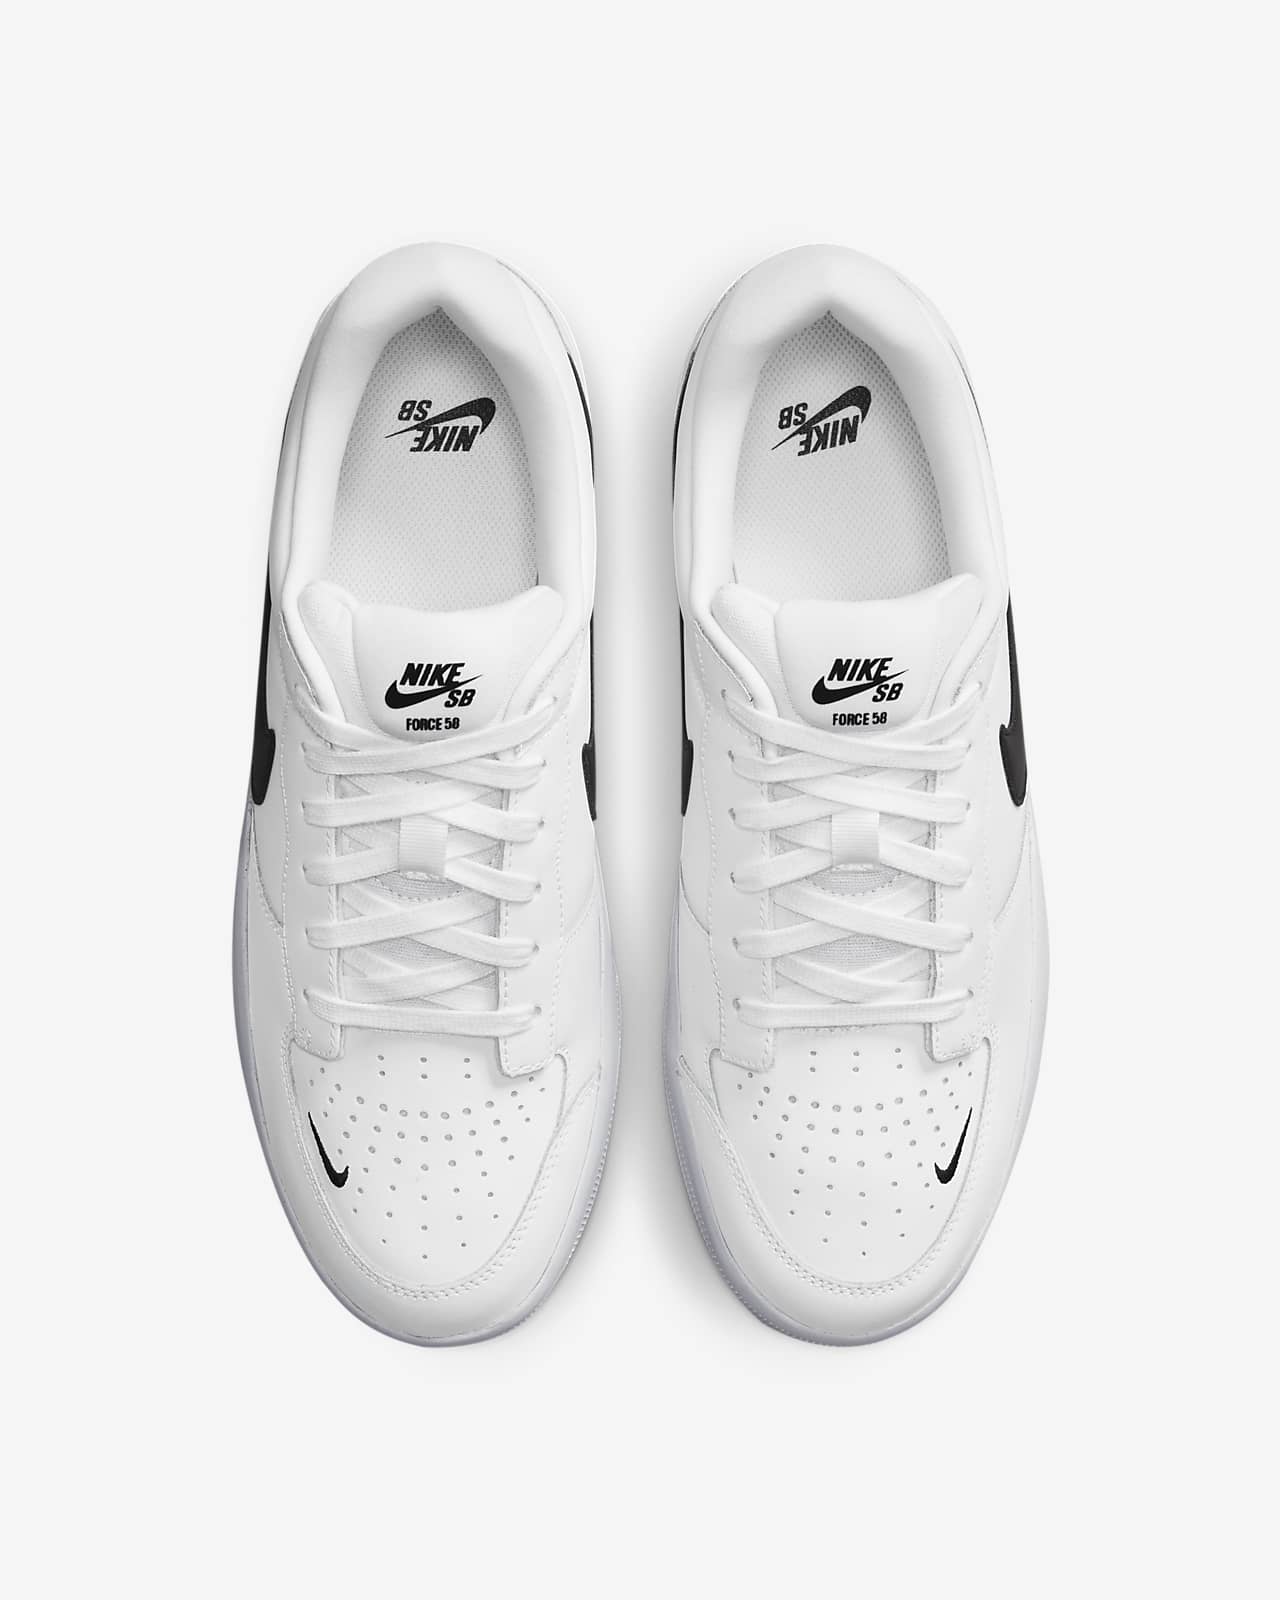 Nike SB Force nike air skate shoes 58 Premium Skate Shoes. Nike.com